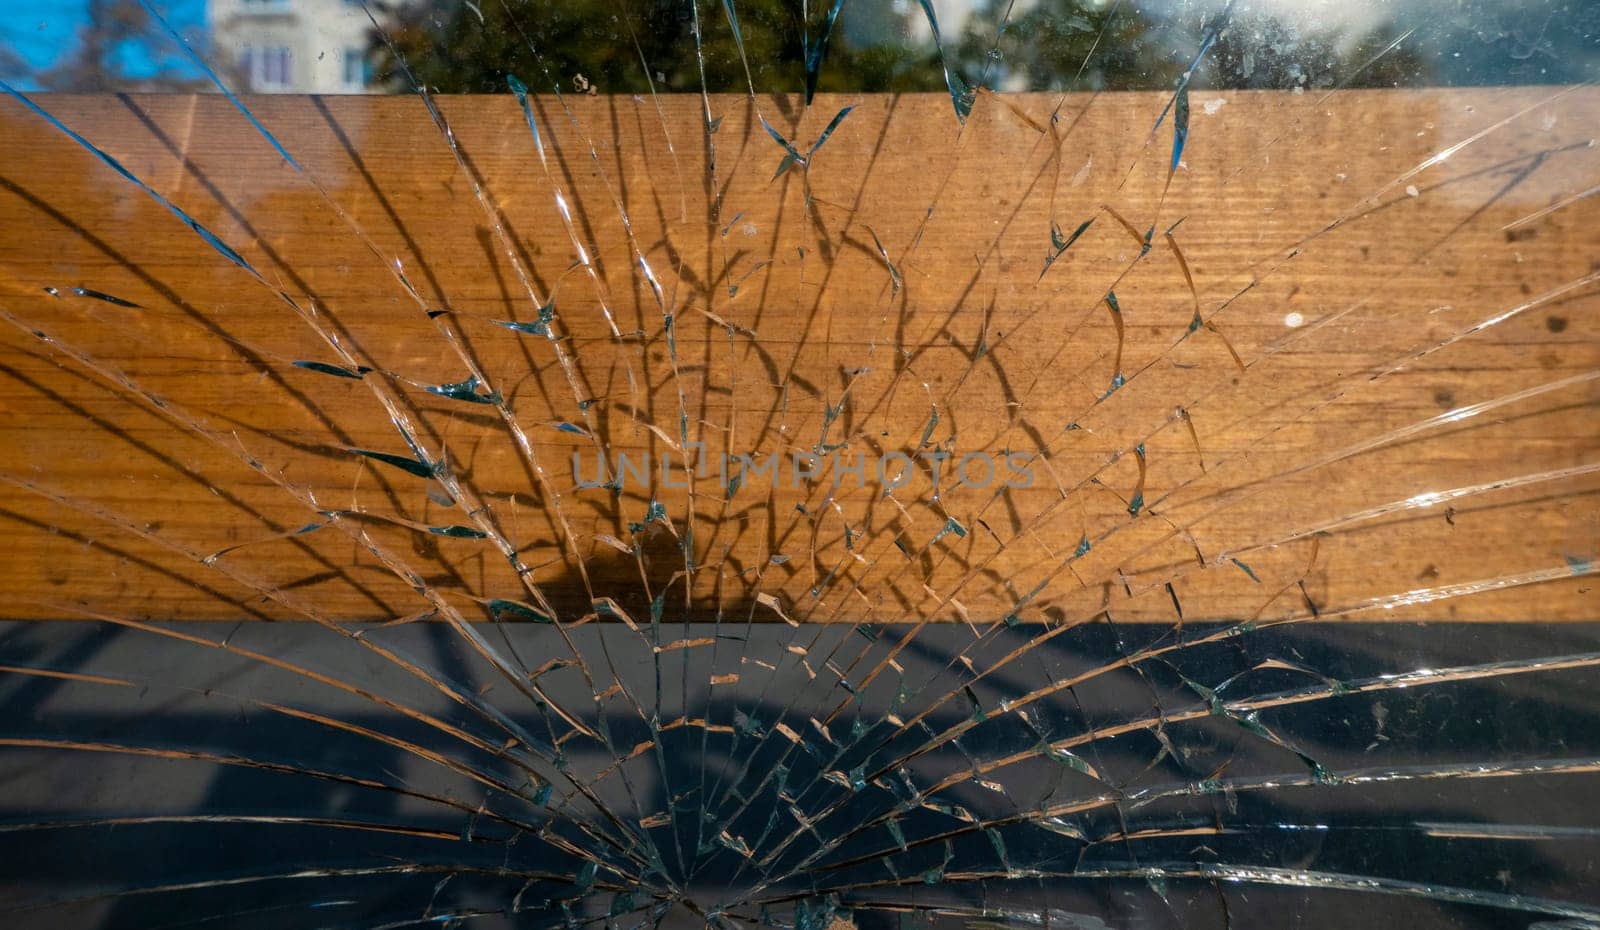 Broken glass at a street bus stop by kajasja